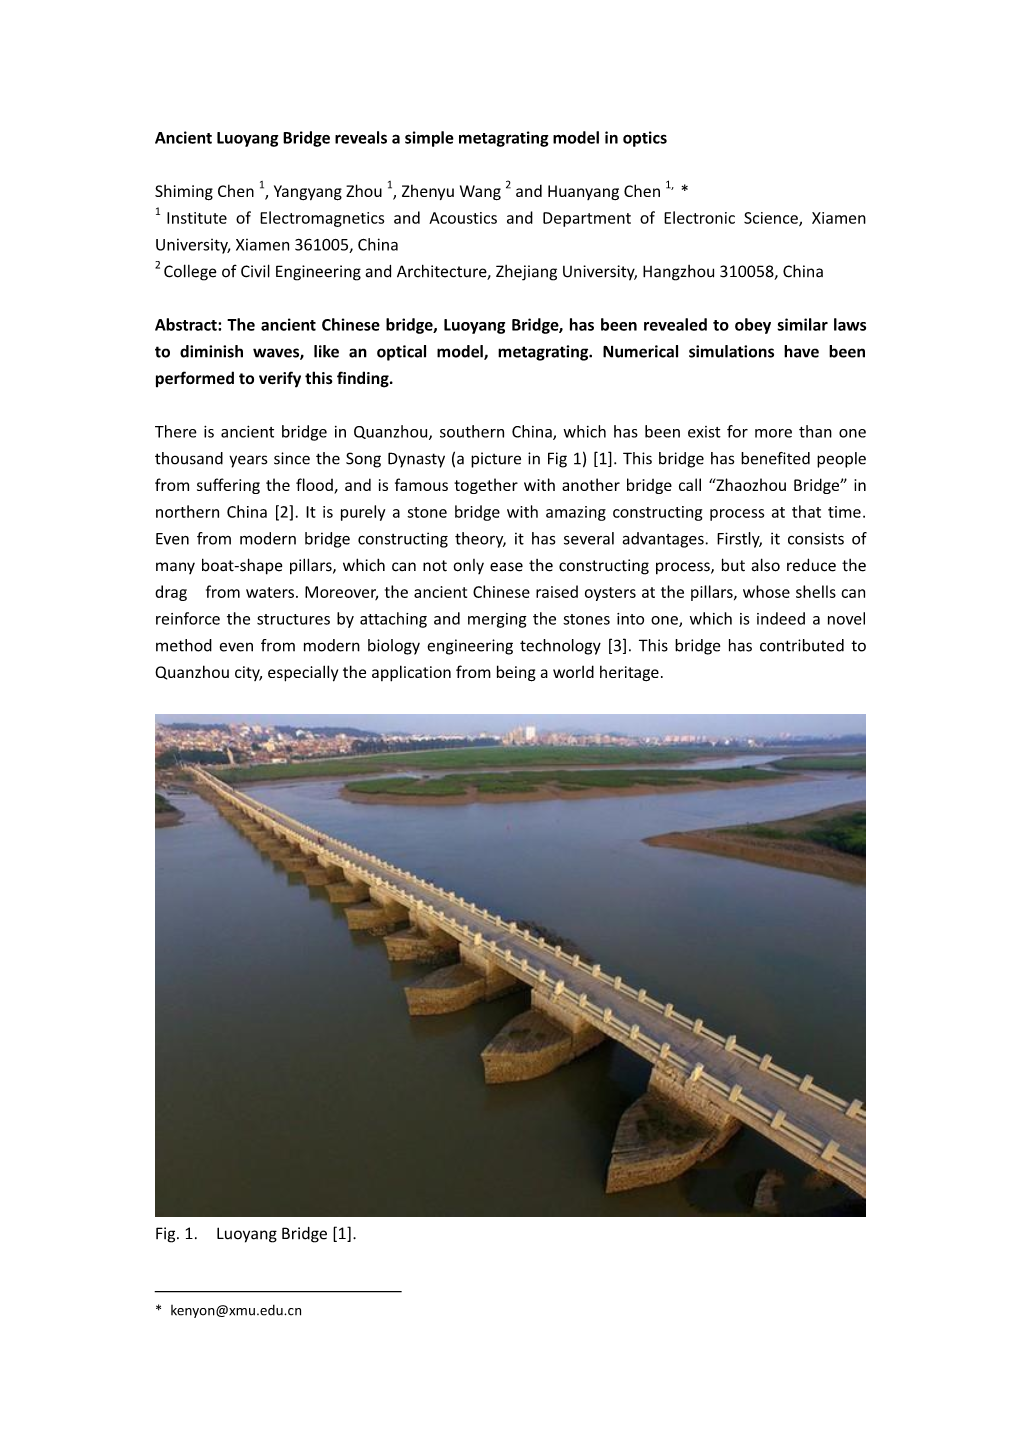 Ancient Luoyang Bridge Reveals a Simple Metagrating Model in Optics Shiming Chen 1, Yangyang Zhou 1, Zhenyu Wang 2 and Huanyang